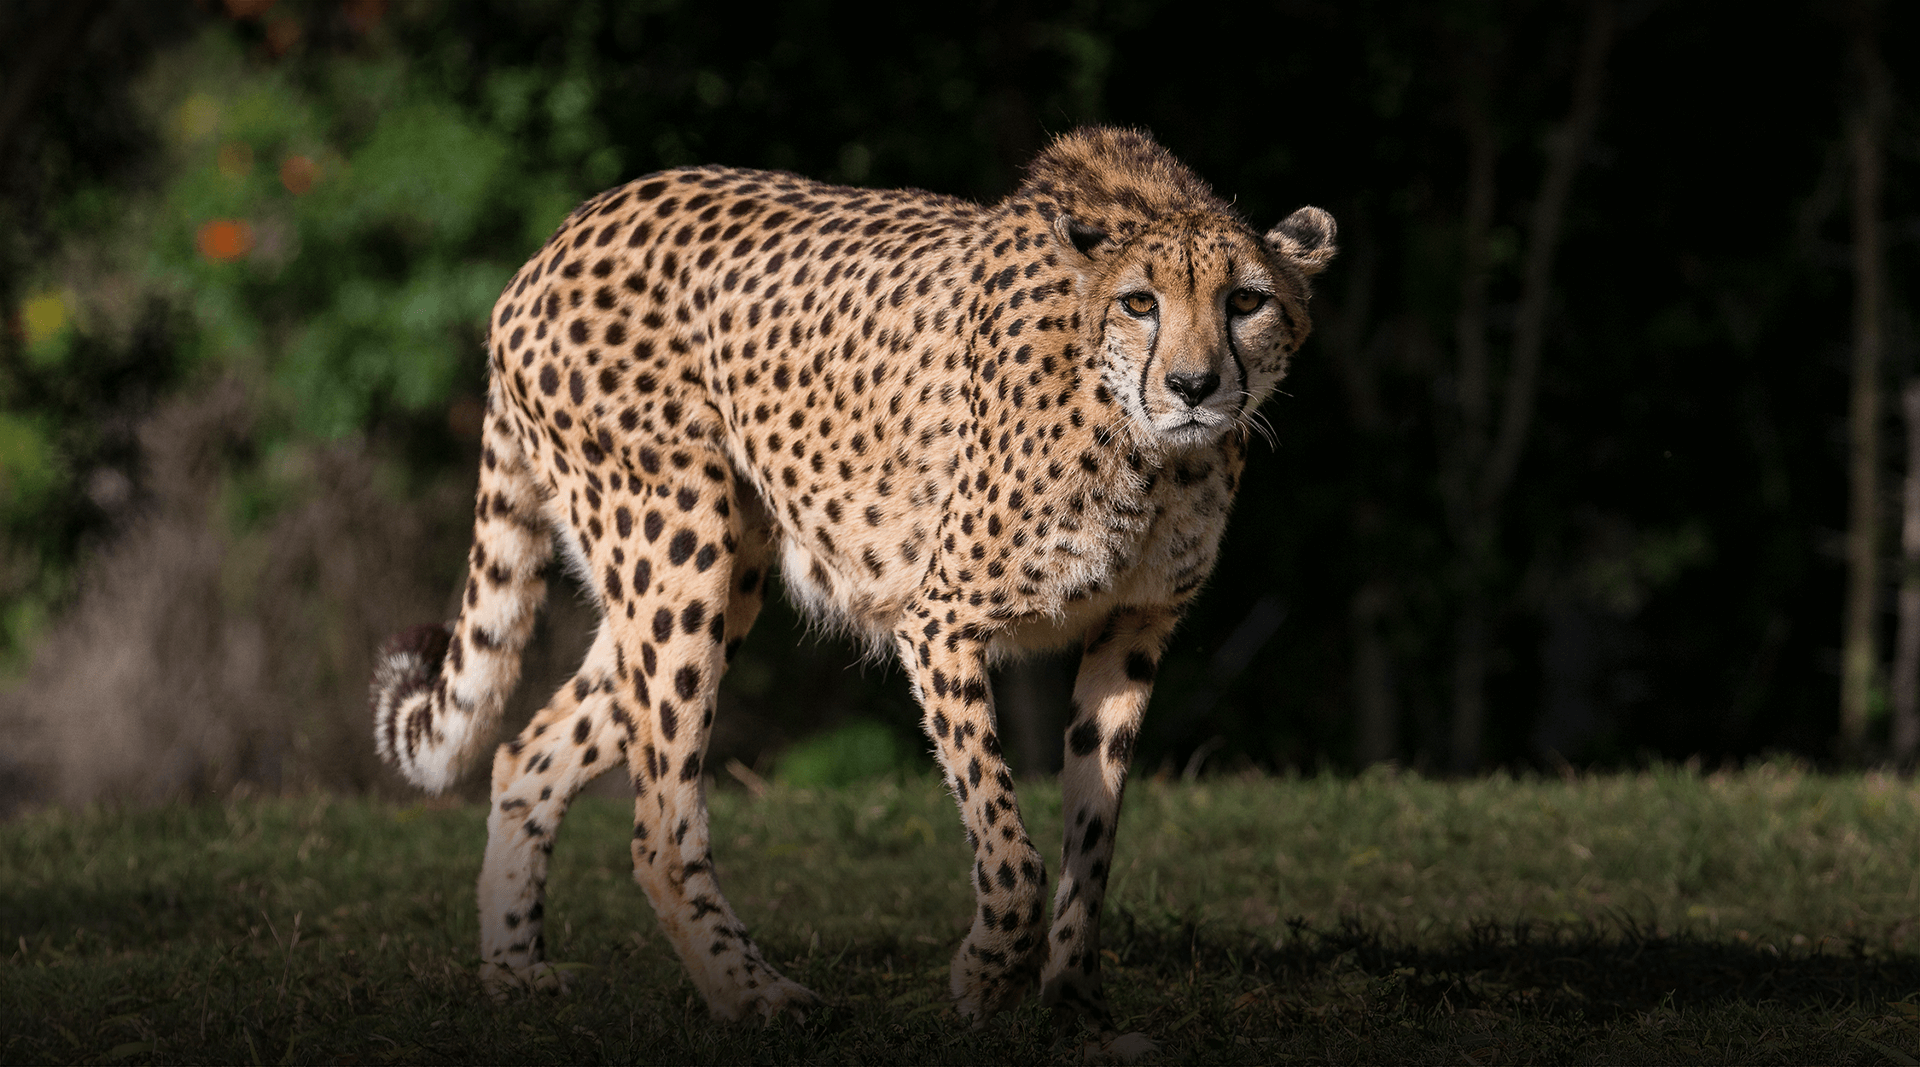 Cheetah walking twoards camera.